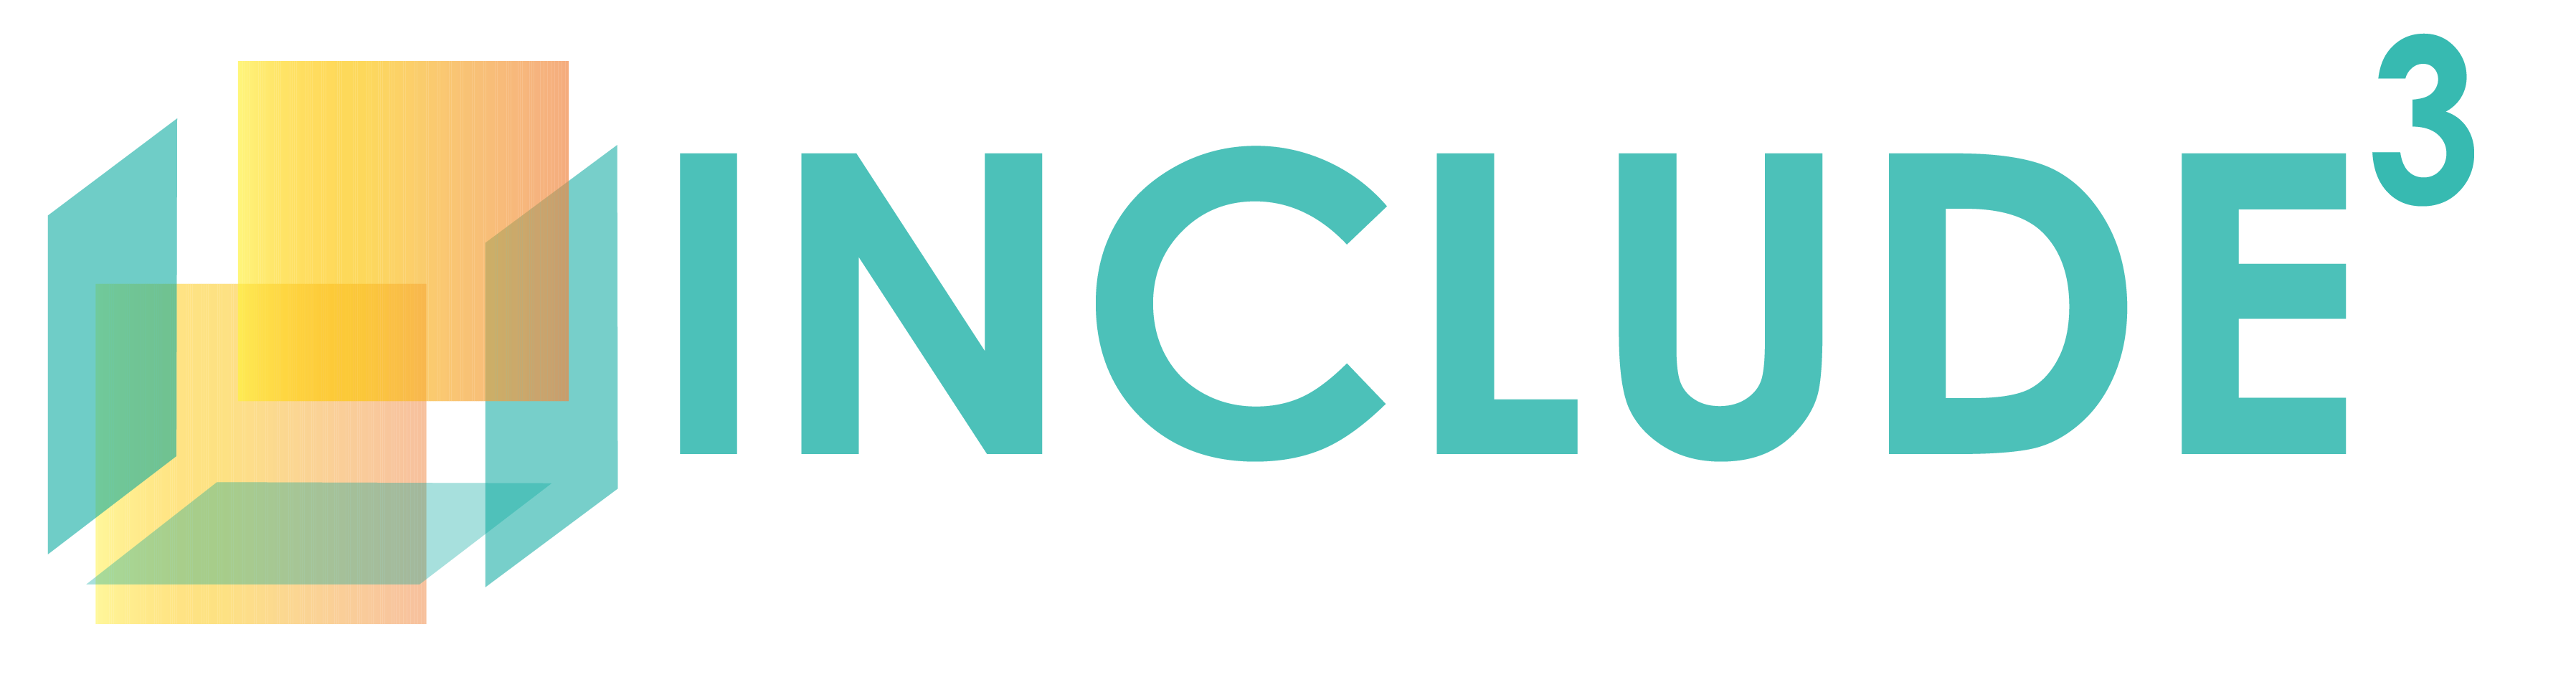 INCLUDE3 logo